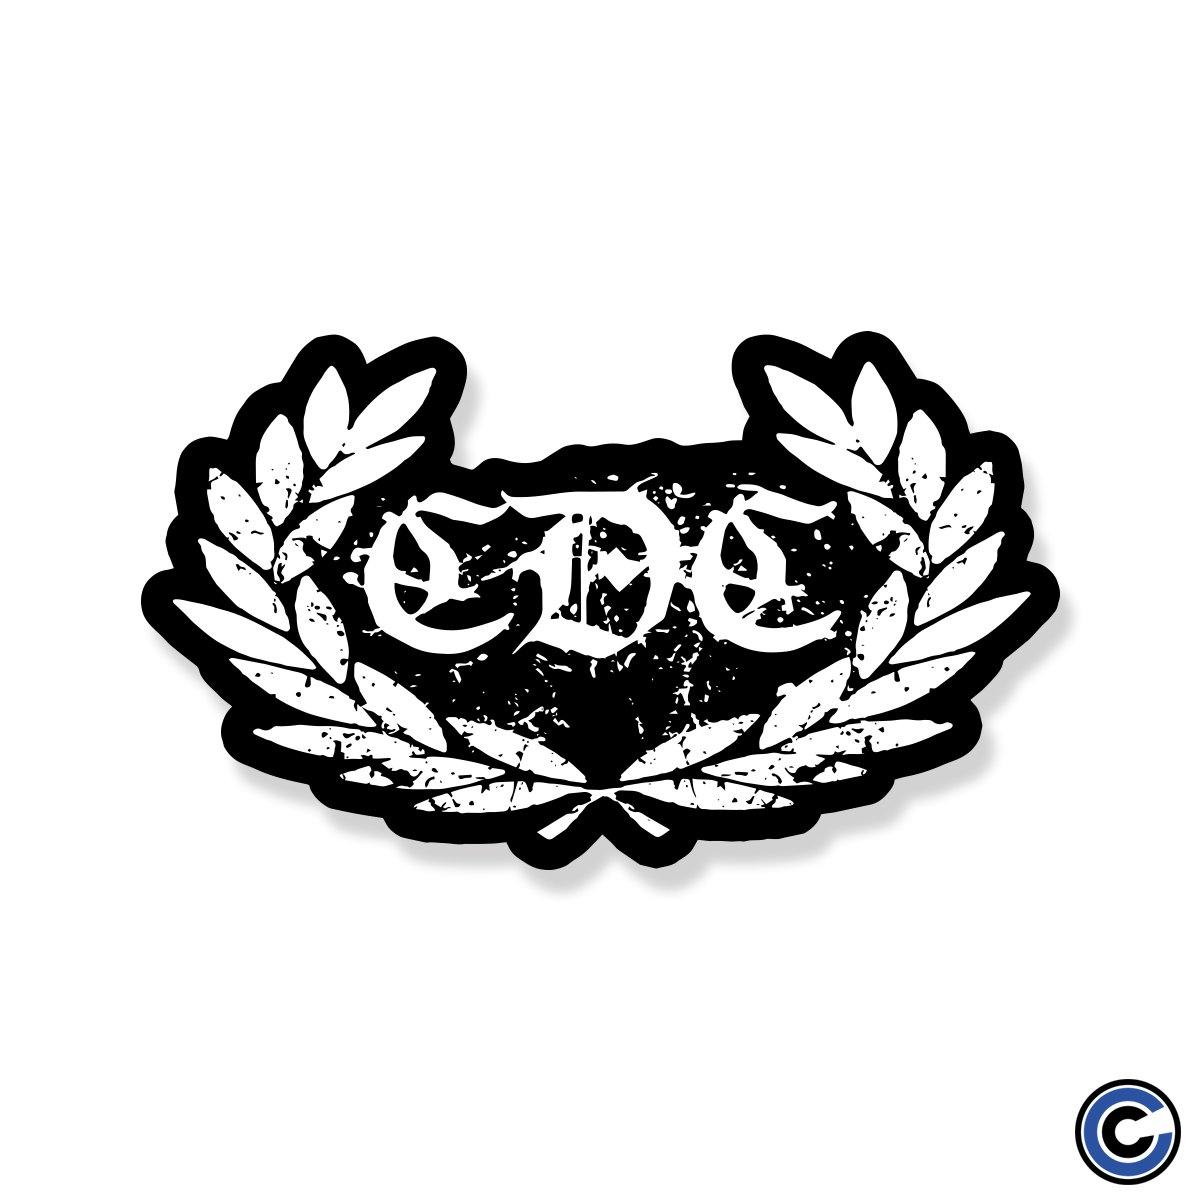 Buy – CDC "Laurel" Sticker – Band & Music Merch – Cold Cuts Merch